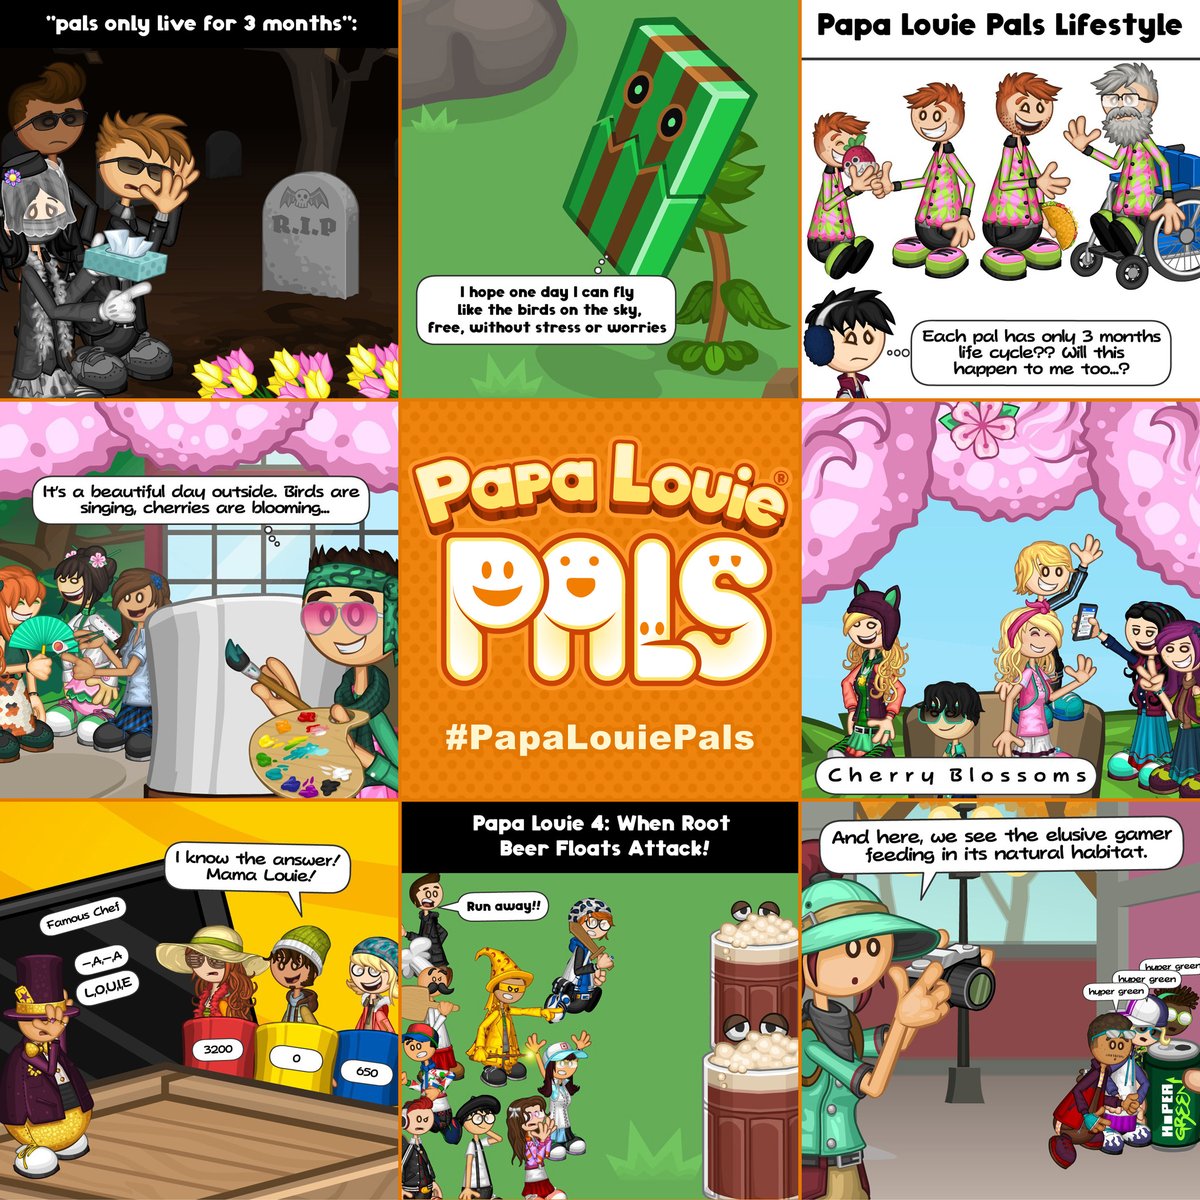 Flipline Studios blog - Papa Louie Pals: Lifestyle Update 